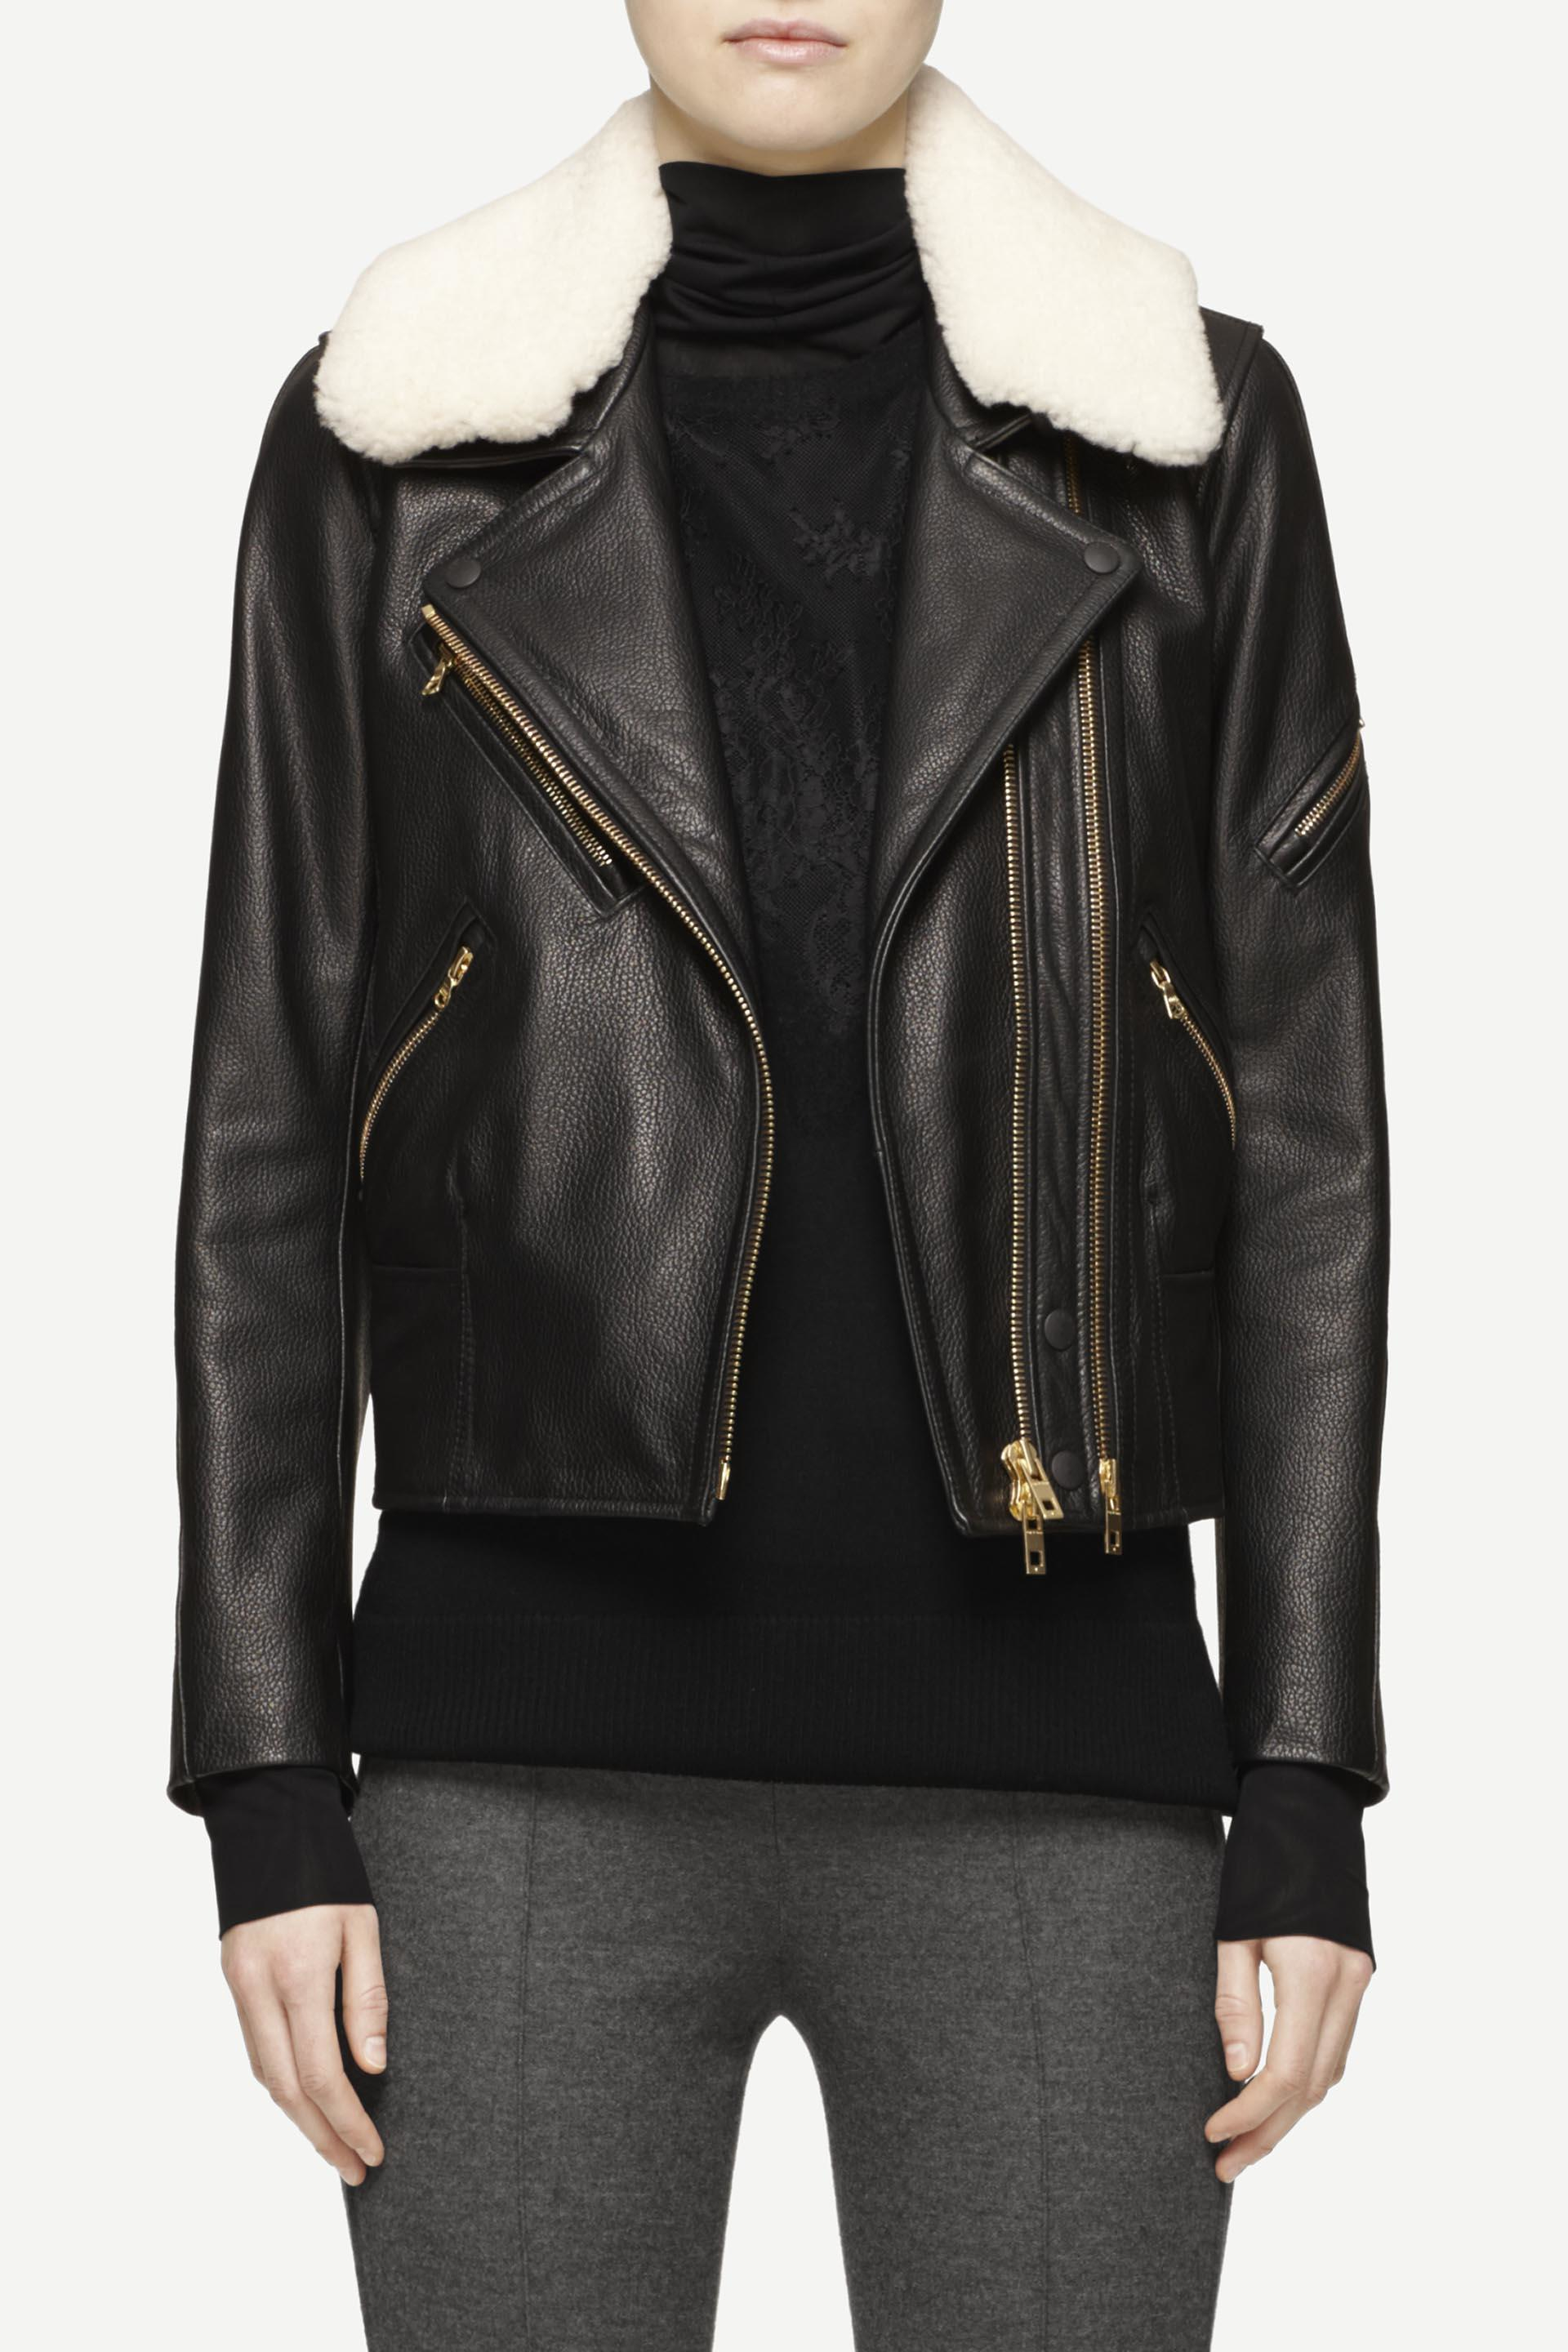 Lyst - Rag & bone Minerva Leather Jacket in Black